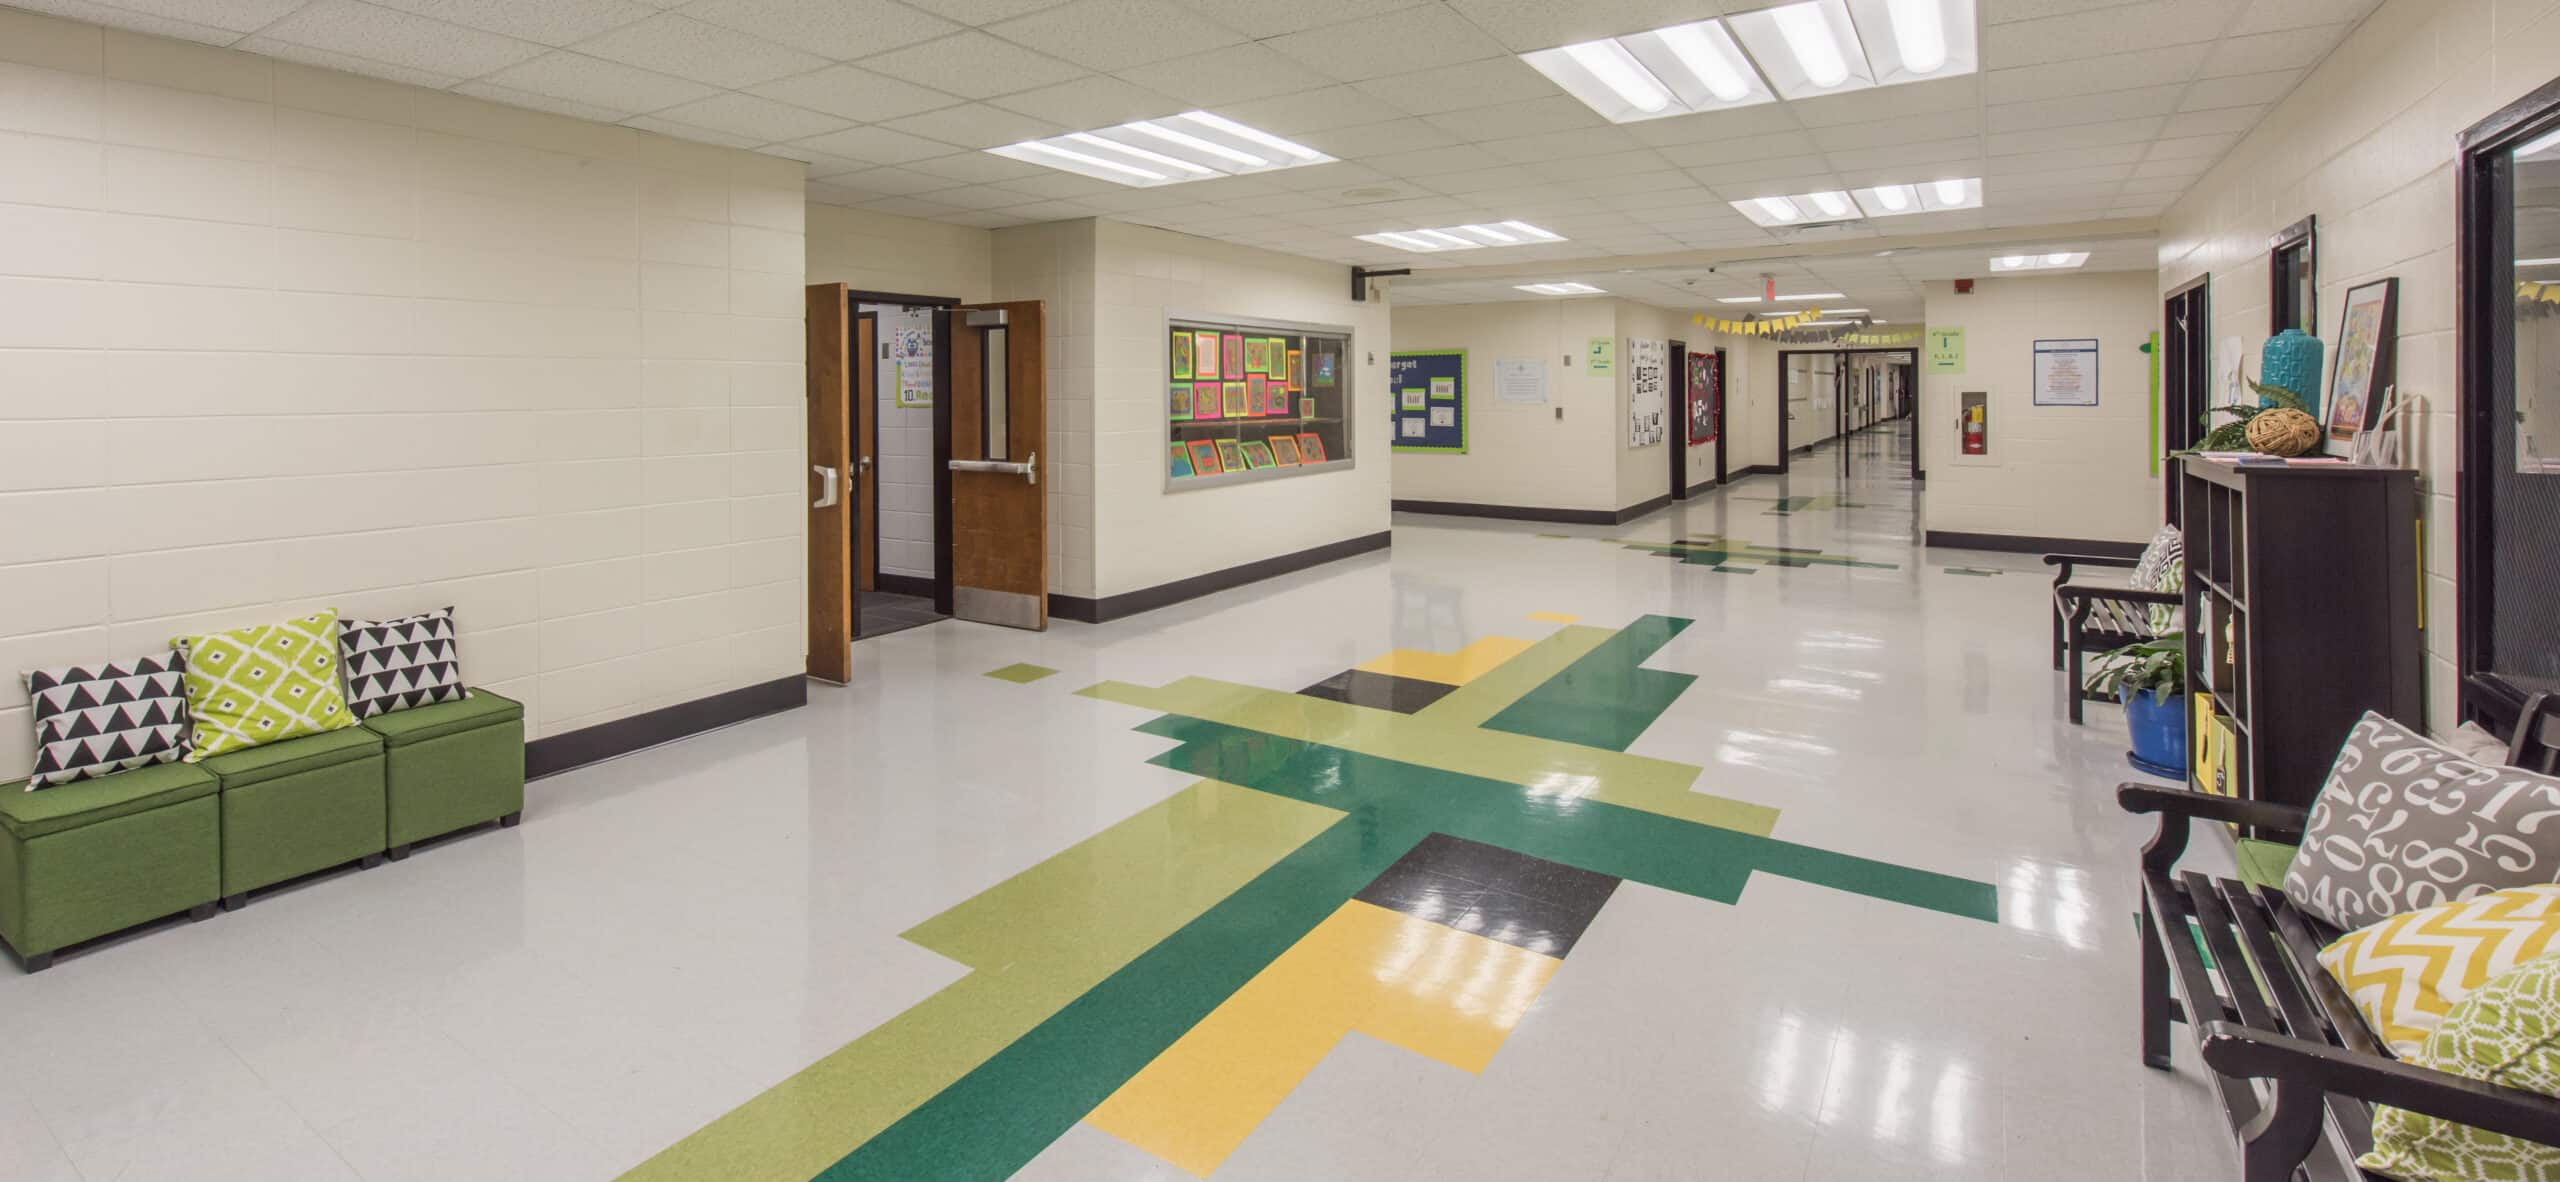 interior image of hallway in huddleson elementary school